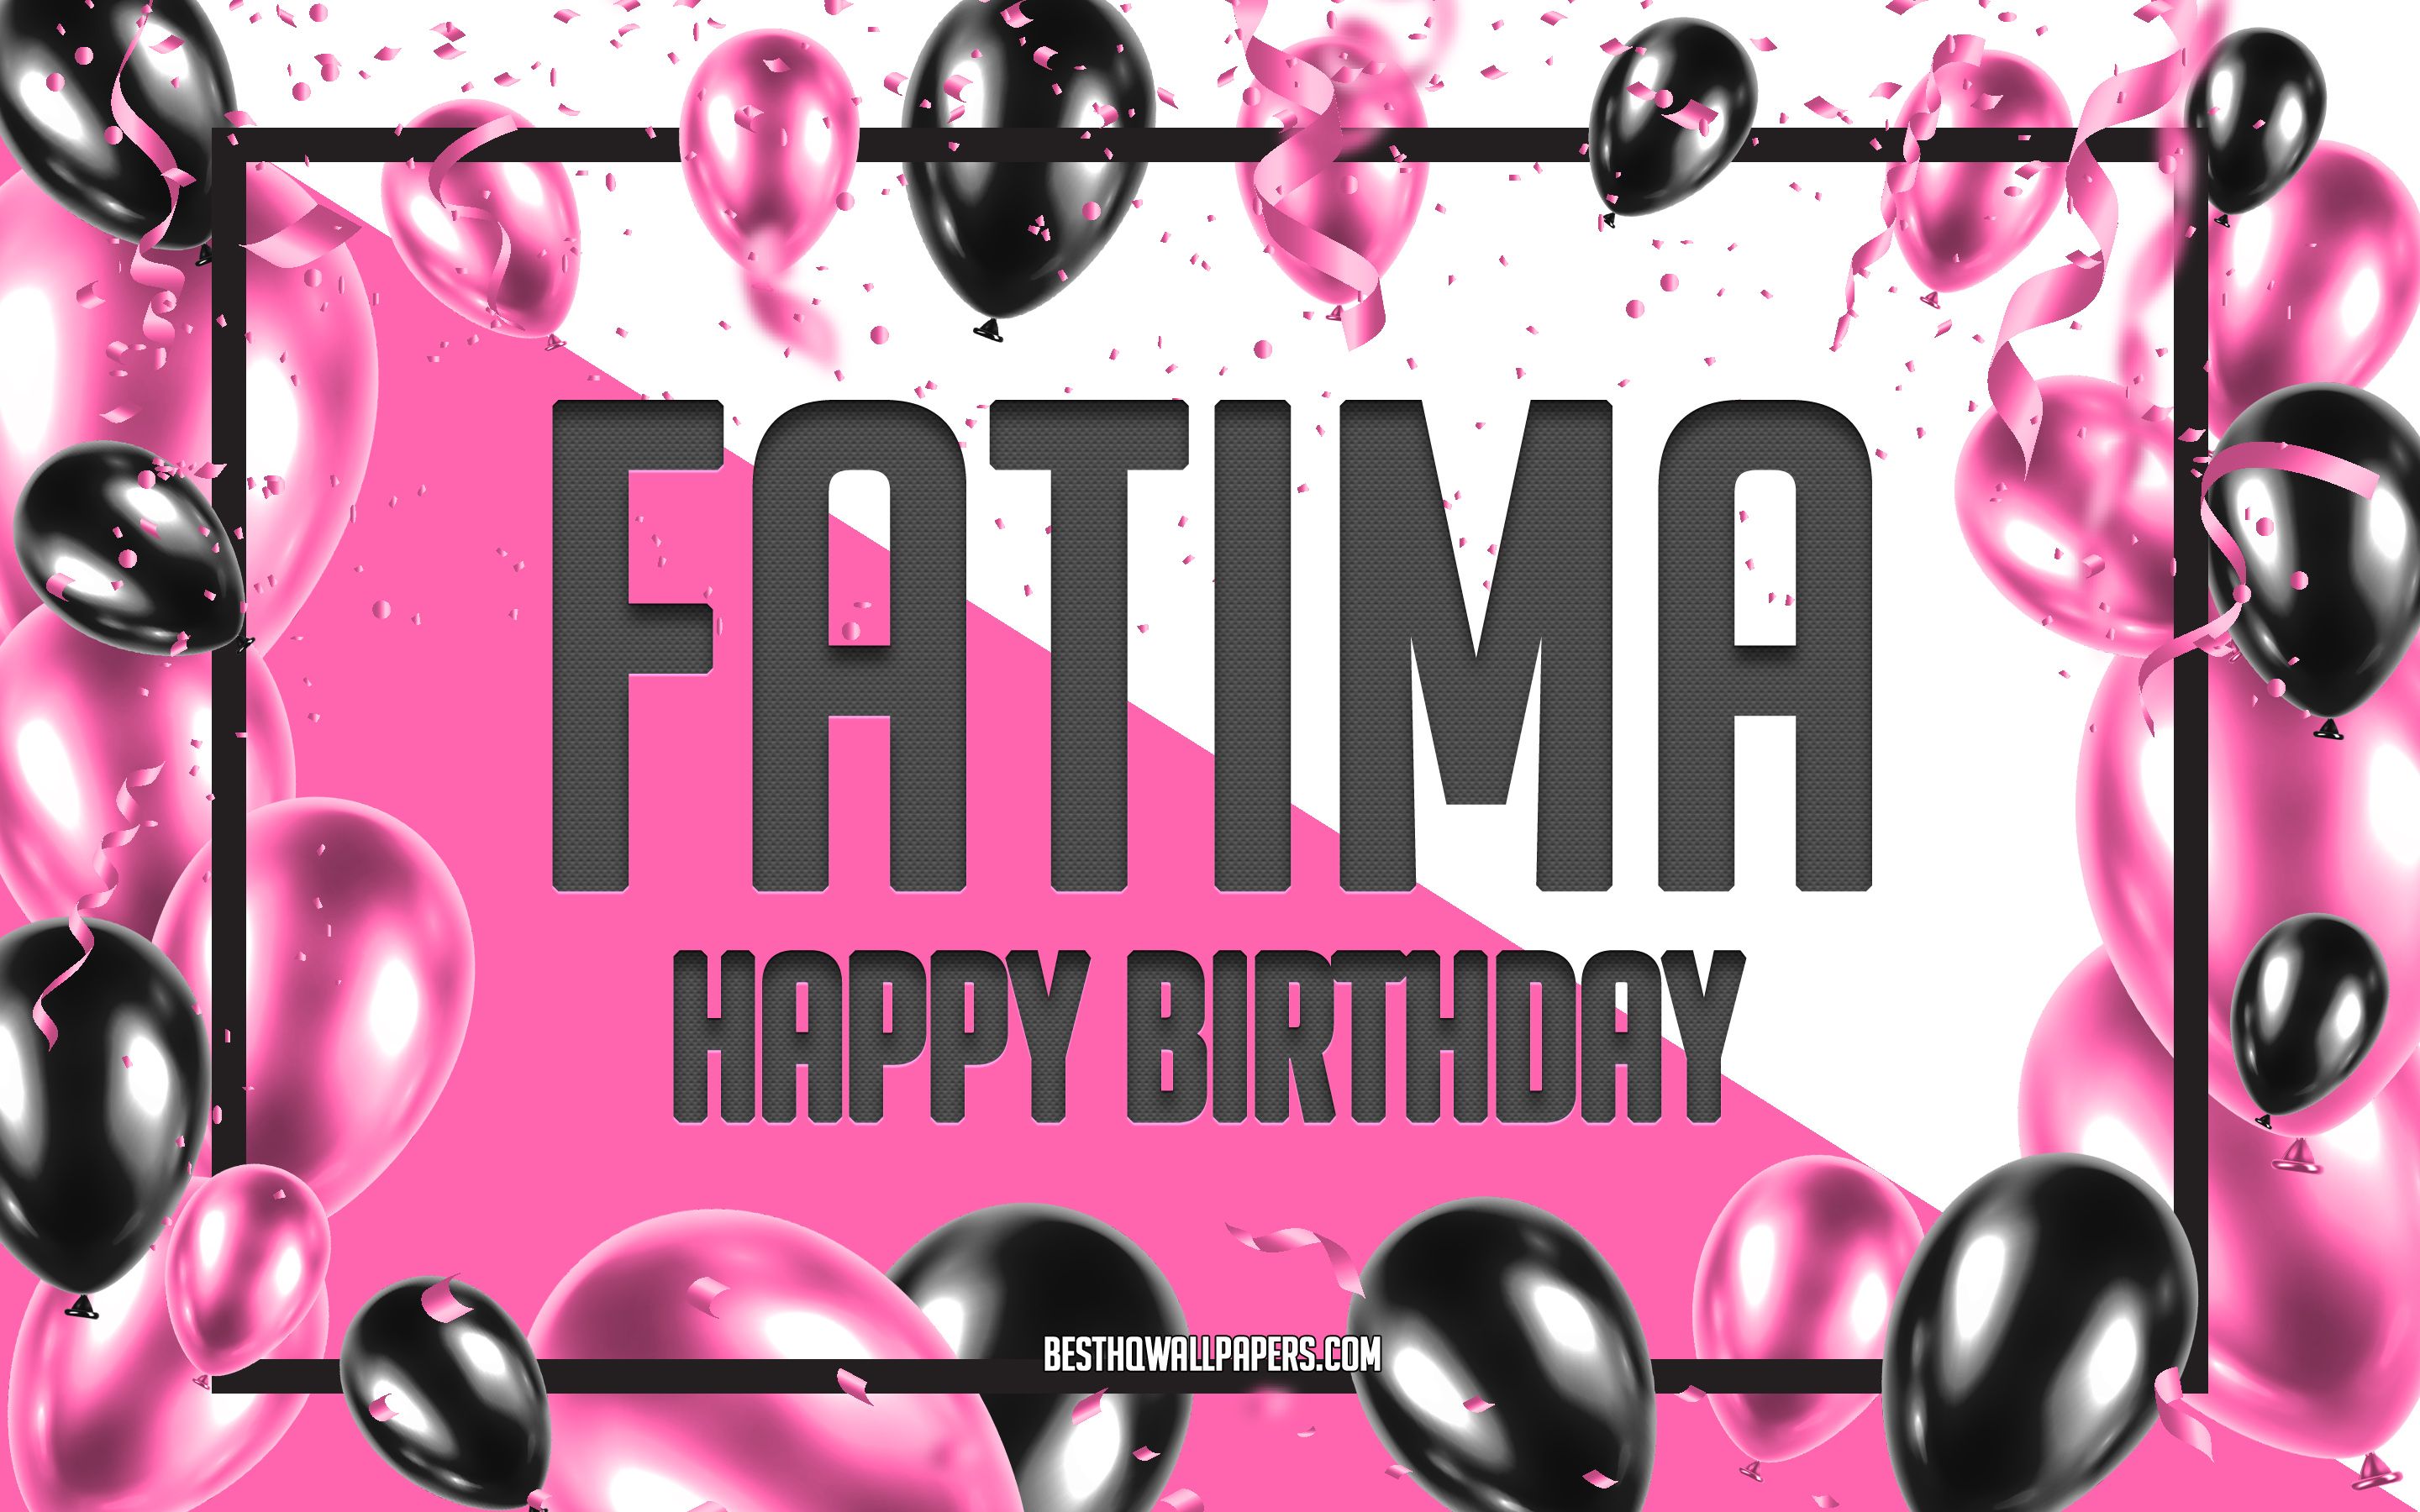 Download wallpaper Happy Birthday Fatima, Birthday Balloons